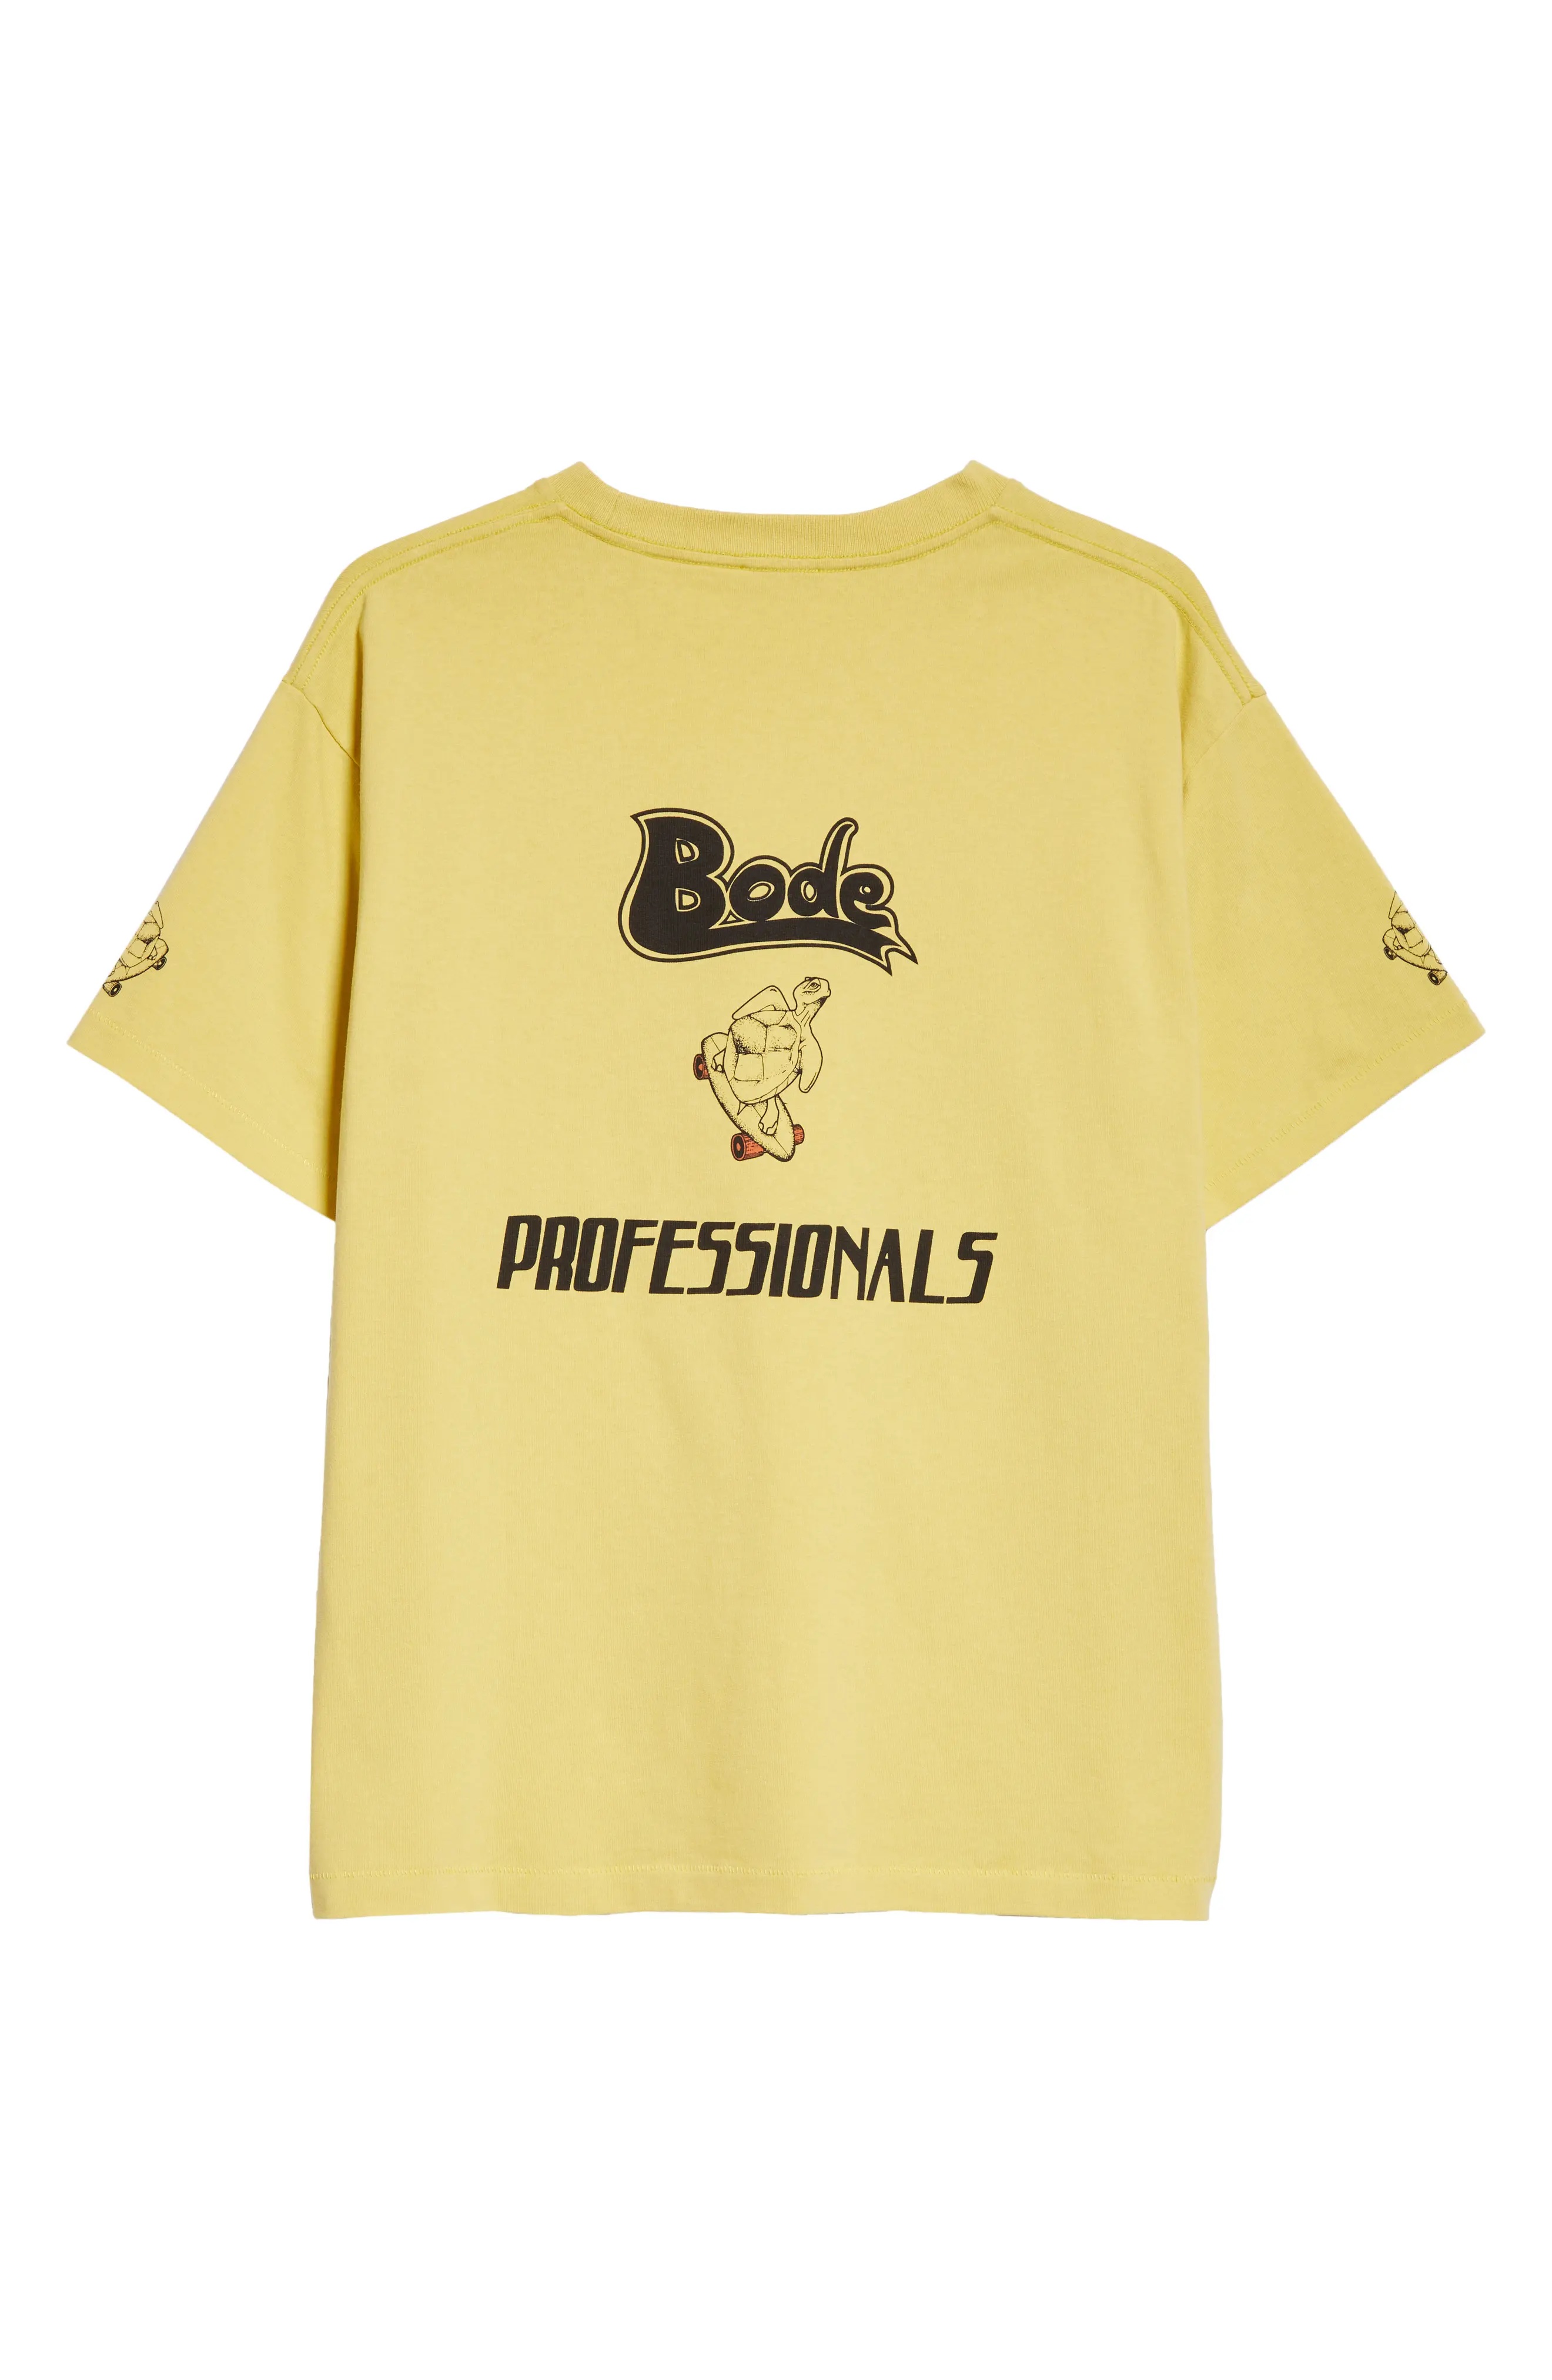 Professionals Graphic T-Shirt - 7